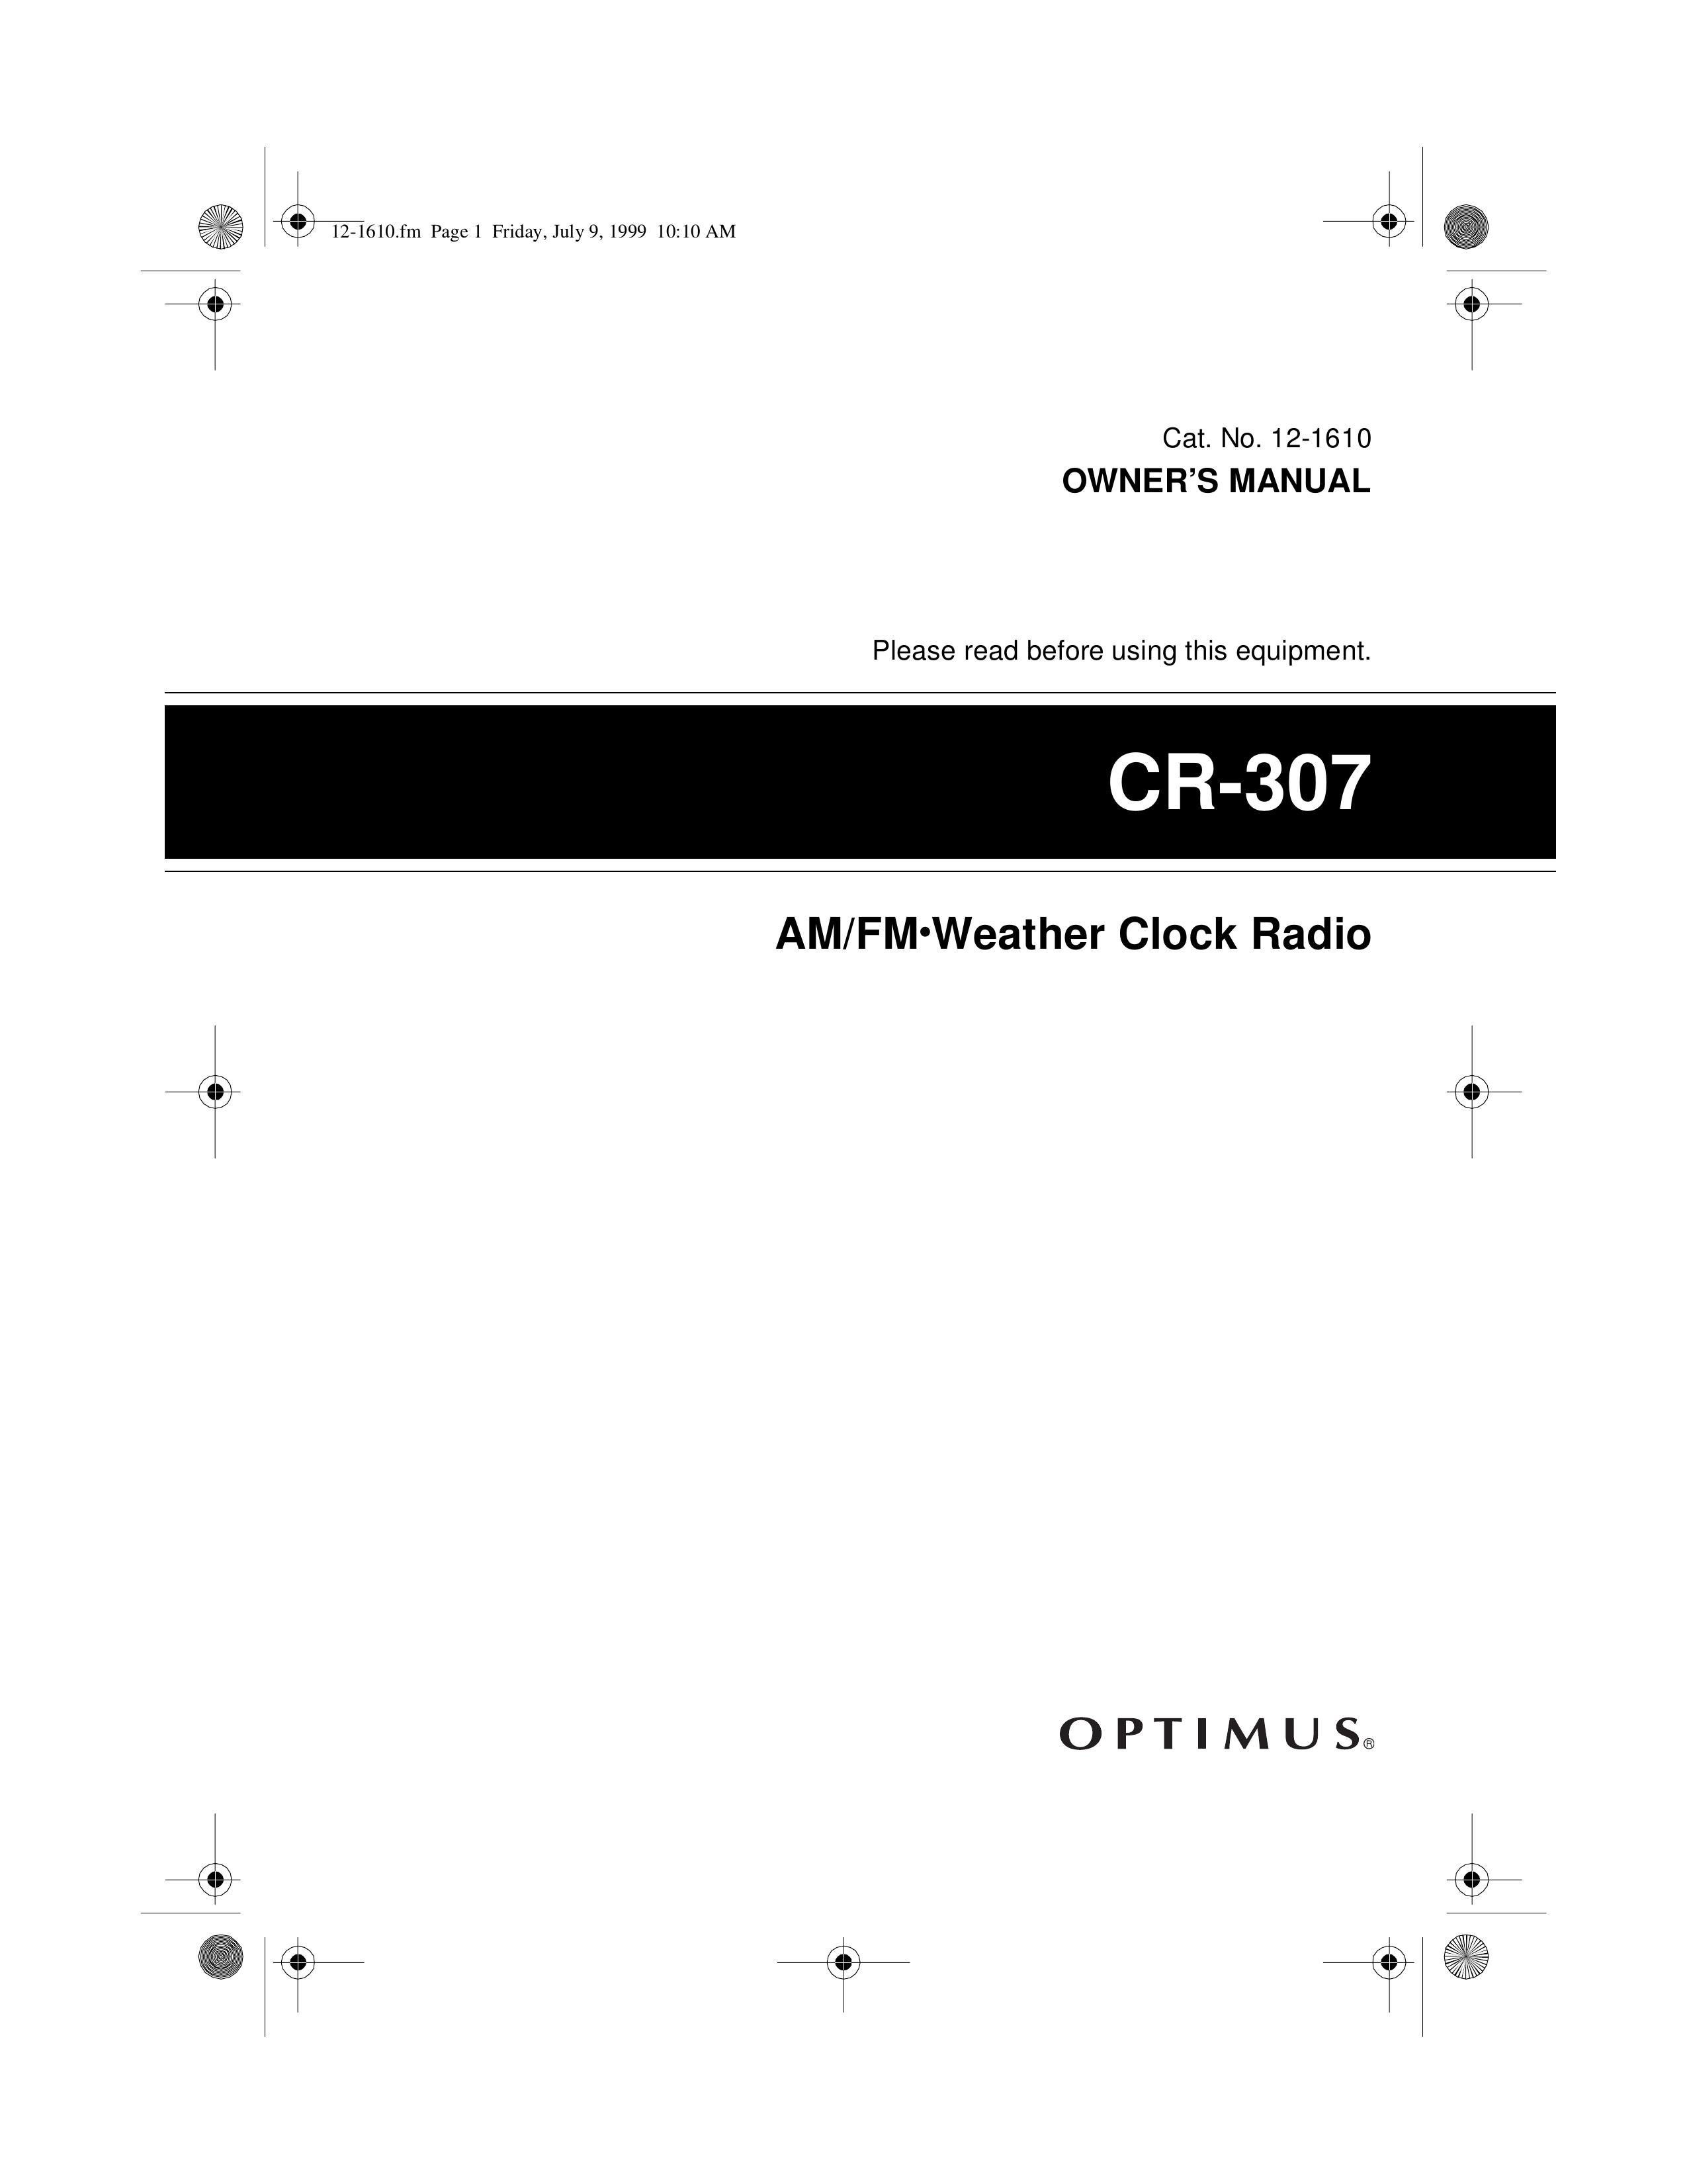 Optimus 12-1610 Clock Radio User Manual